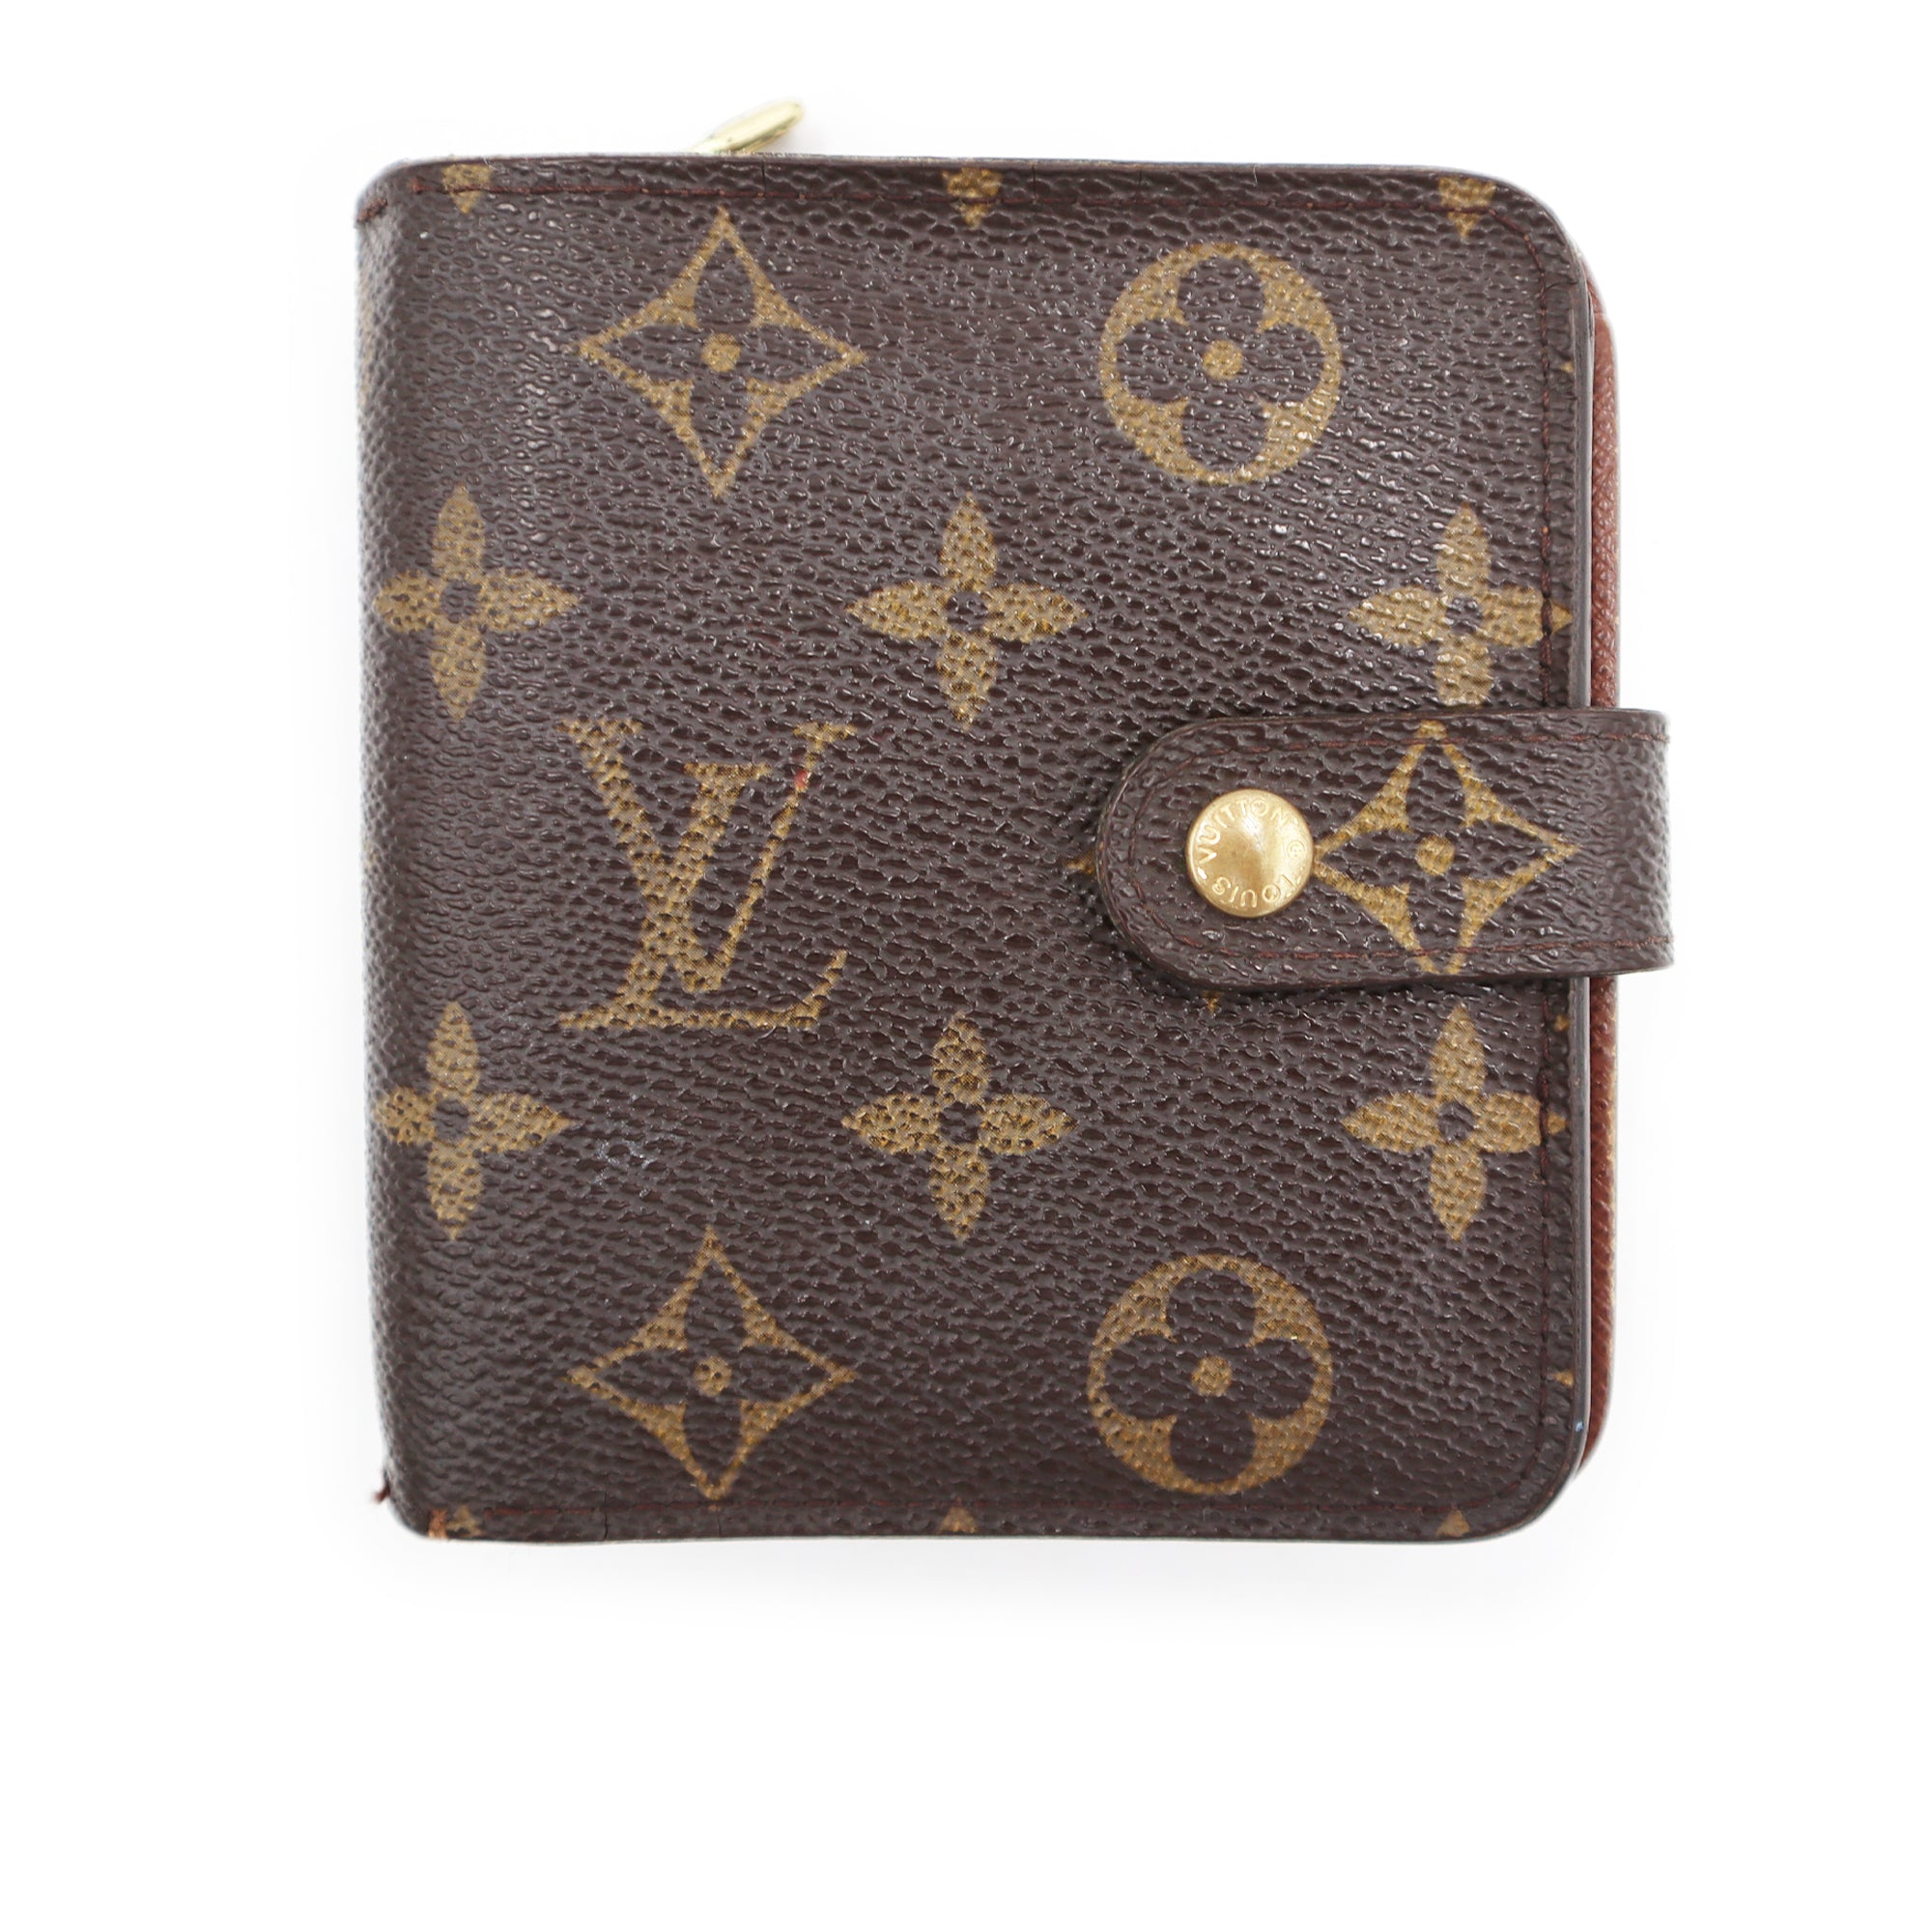 Pre-Owned Louis Vuitton Monogram Canvas Compact Zipped Wallet